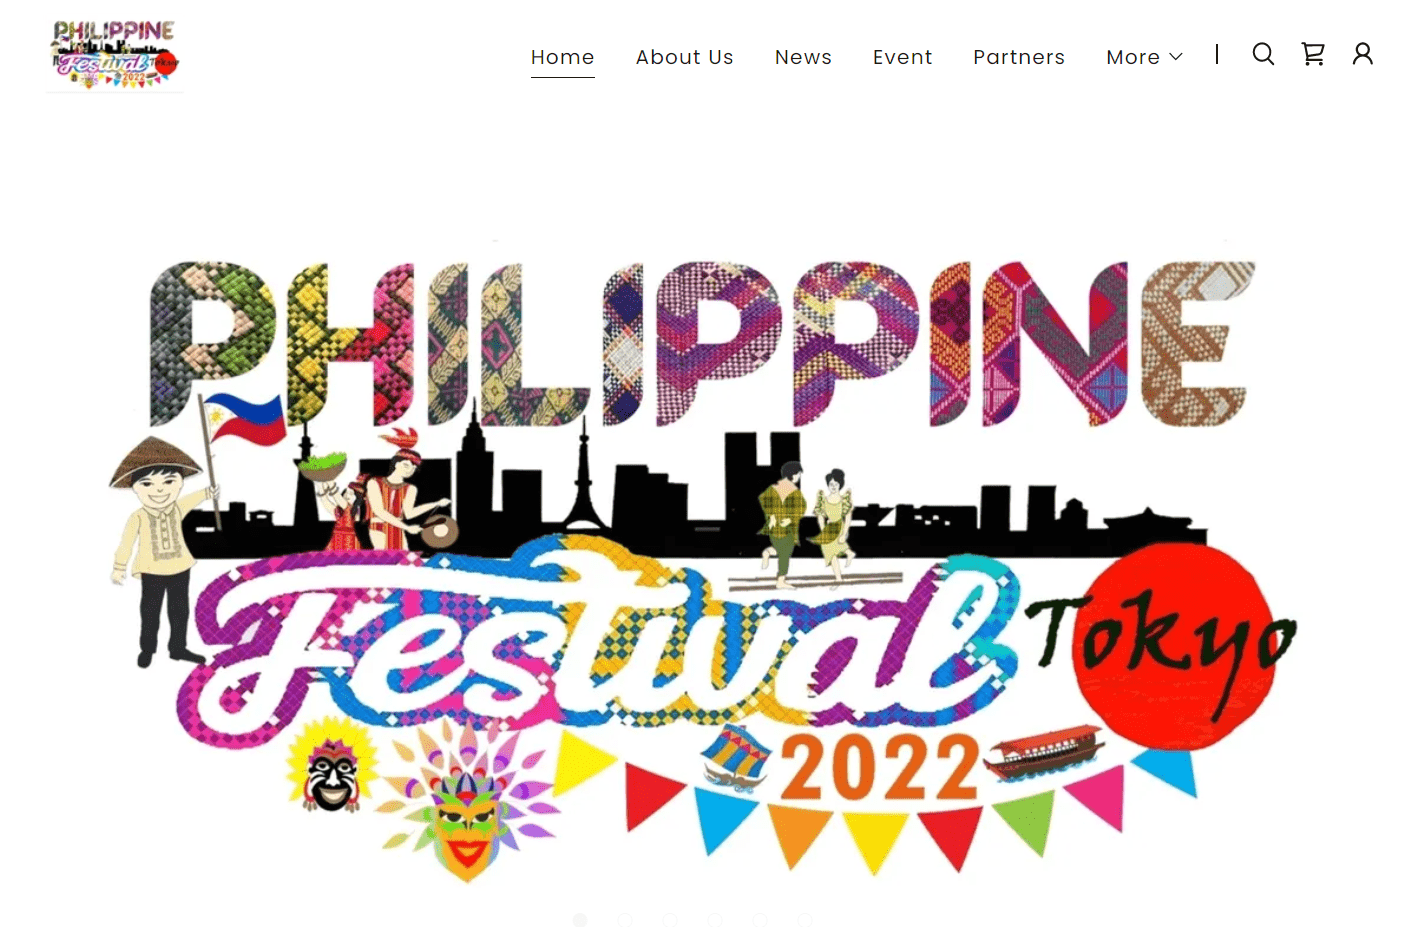 Philippine Festival Tokyo 2022